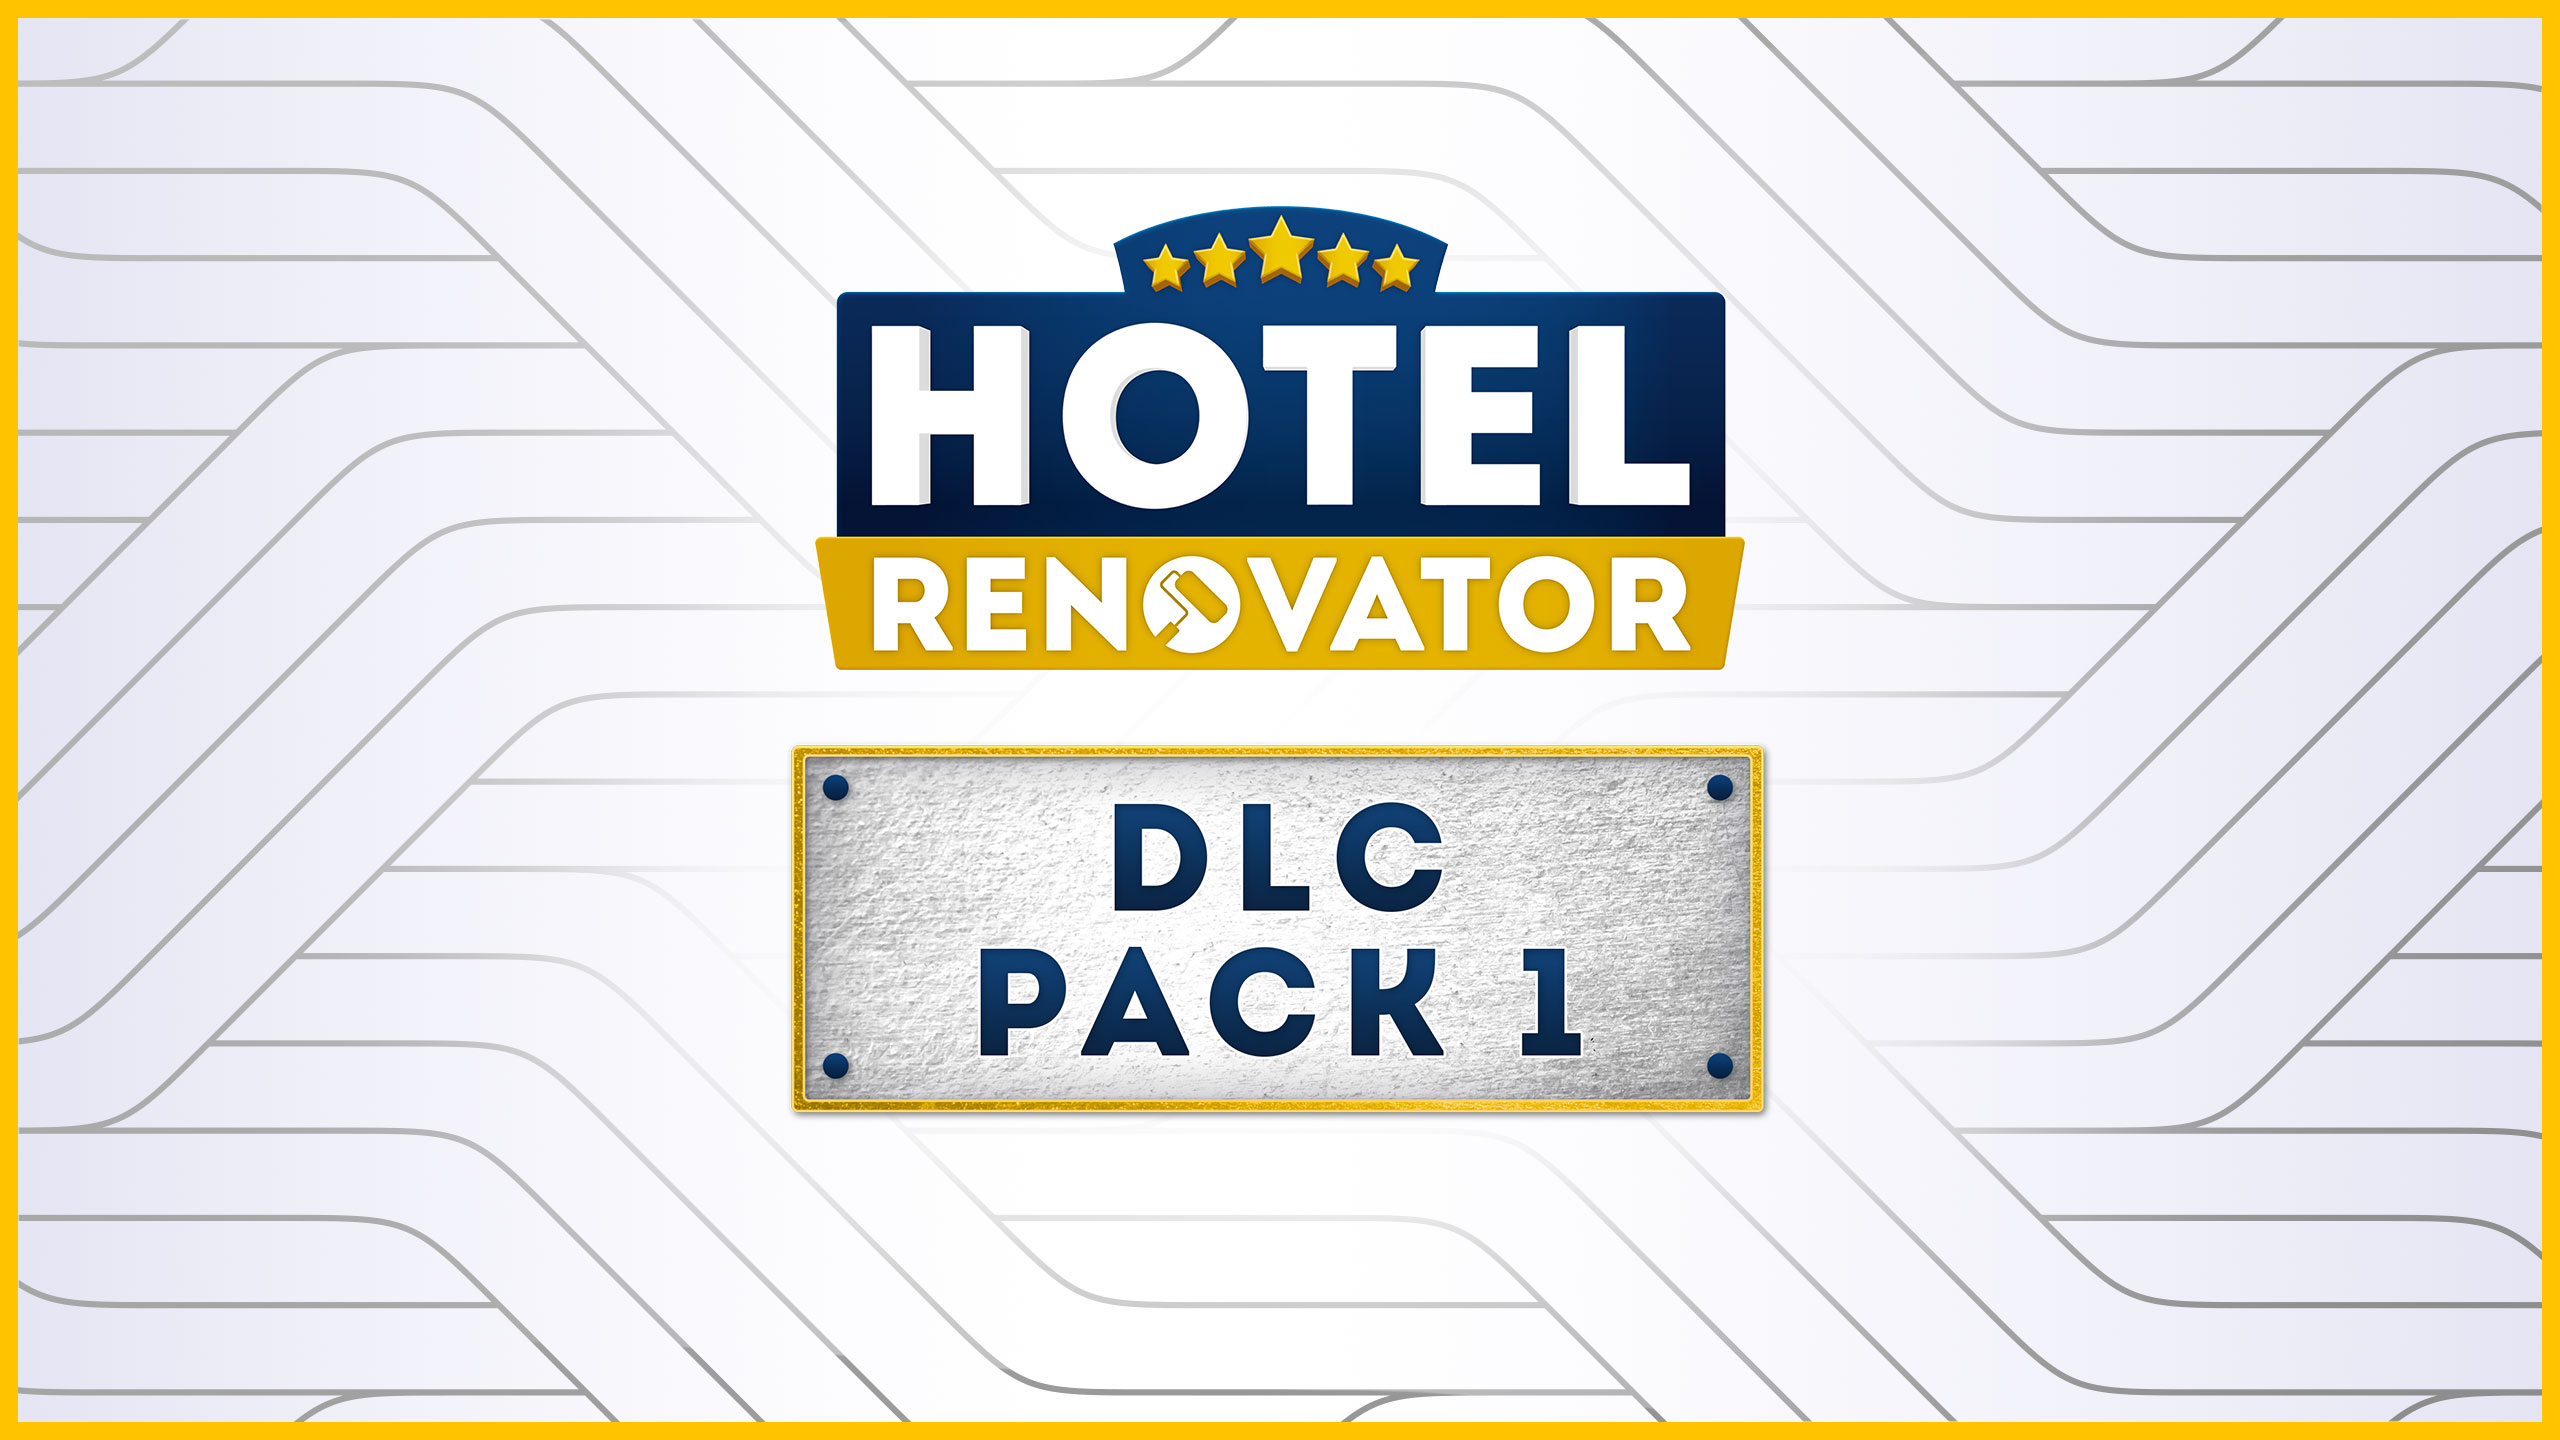 Hotel Renovator Five Star Edition Steam CD Key